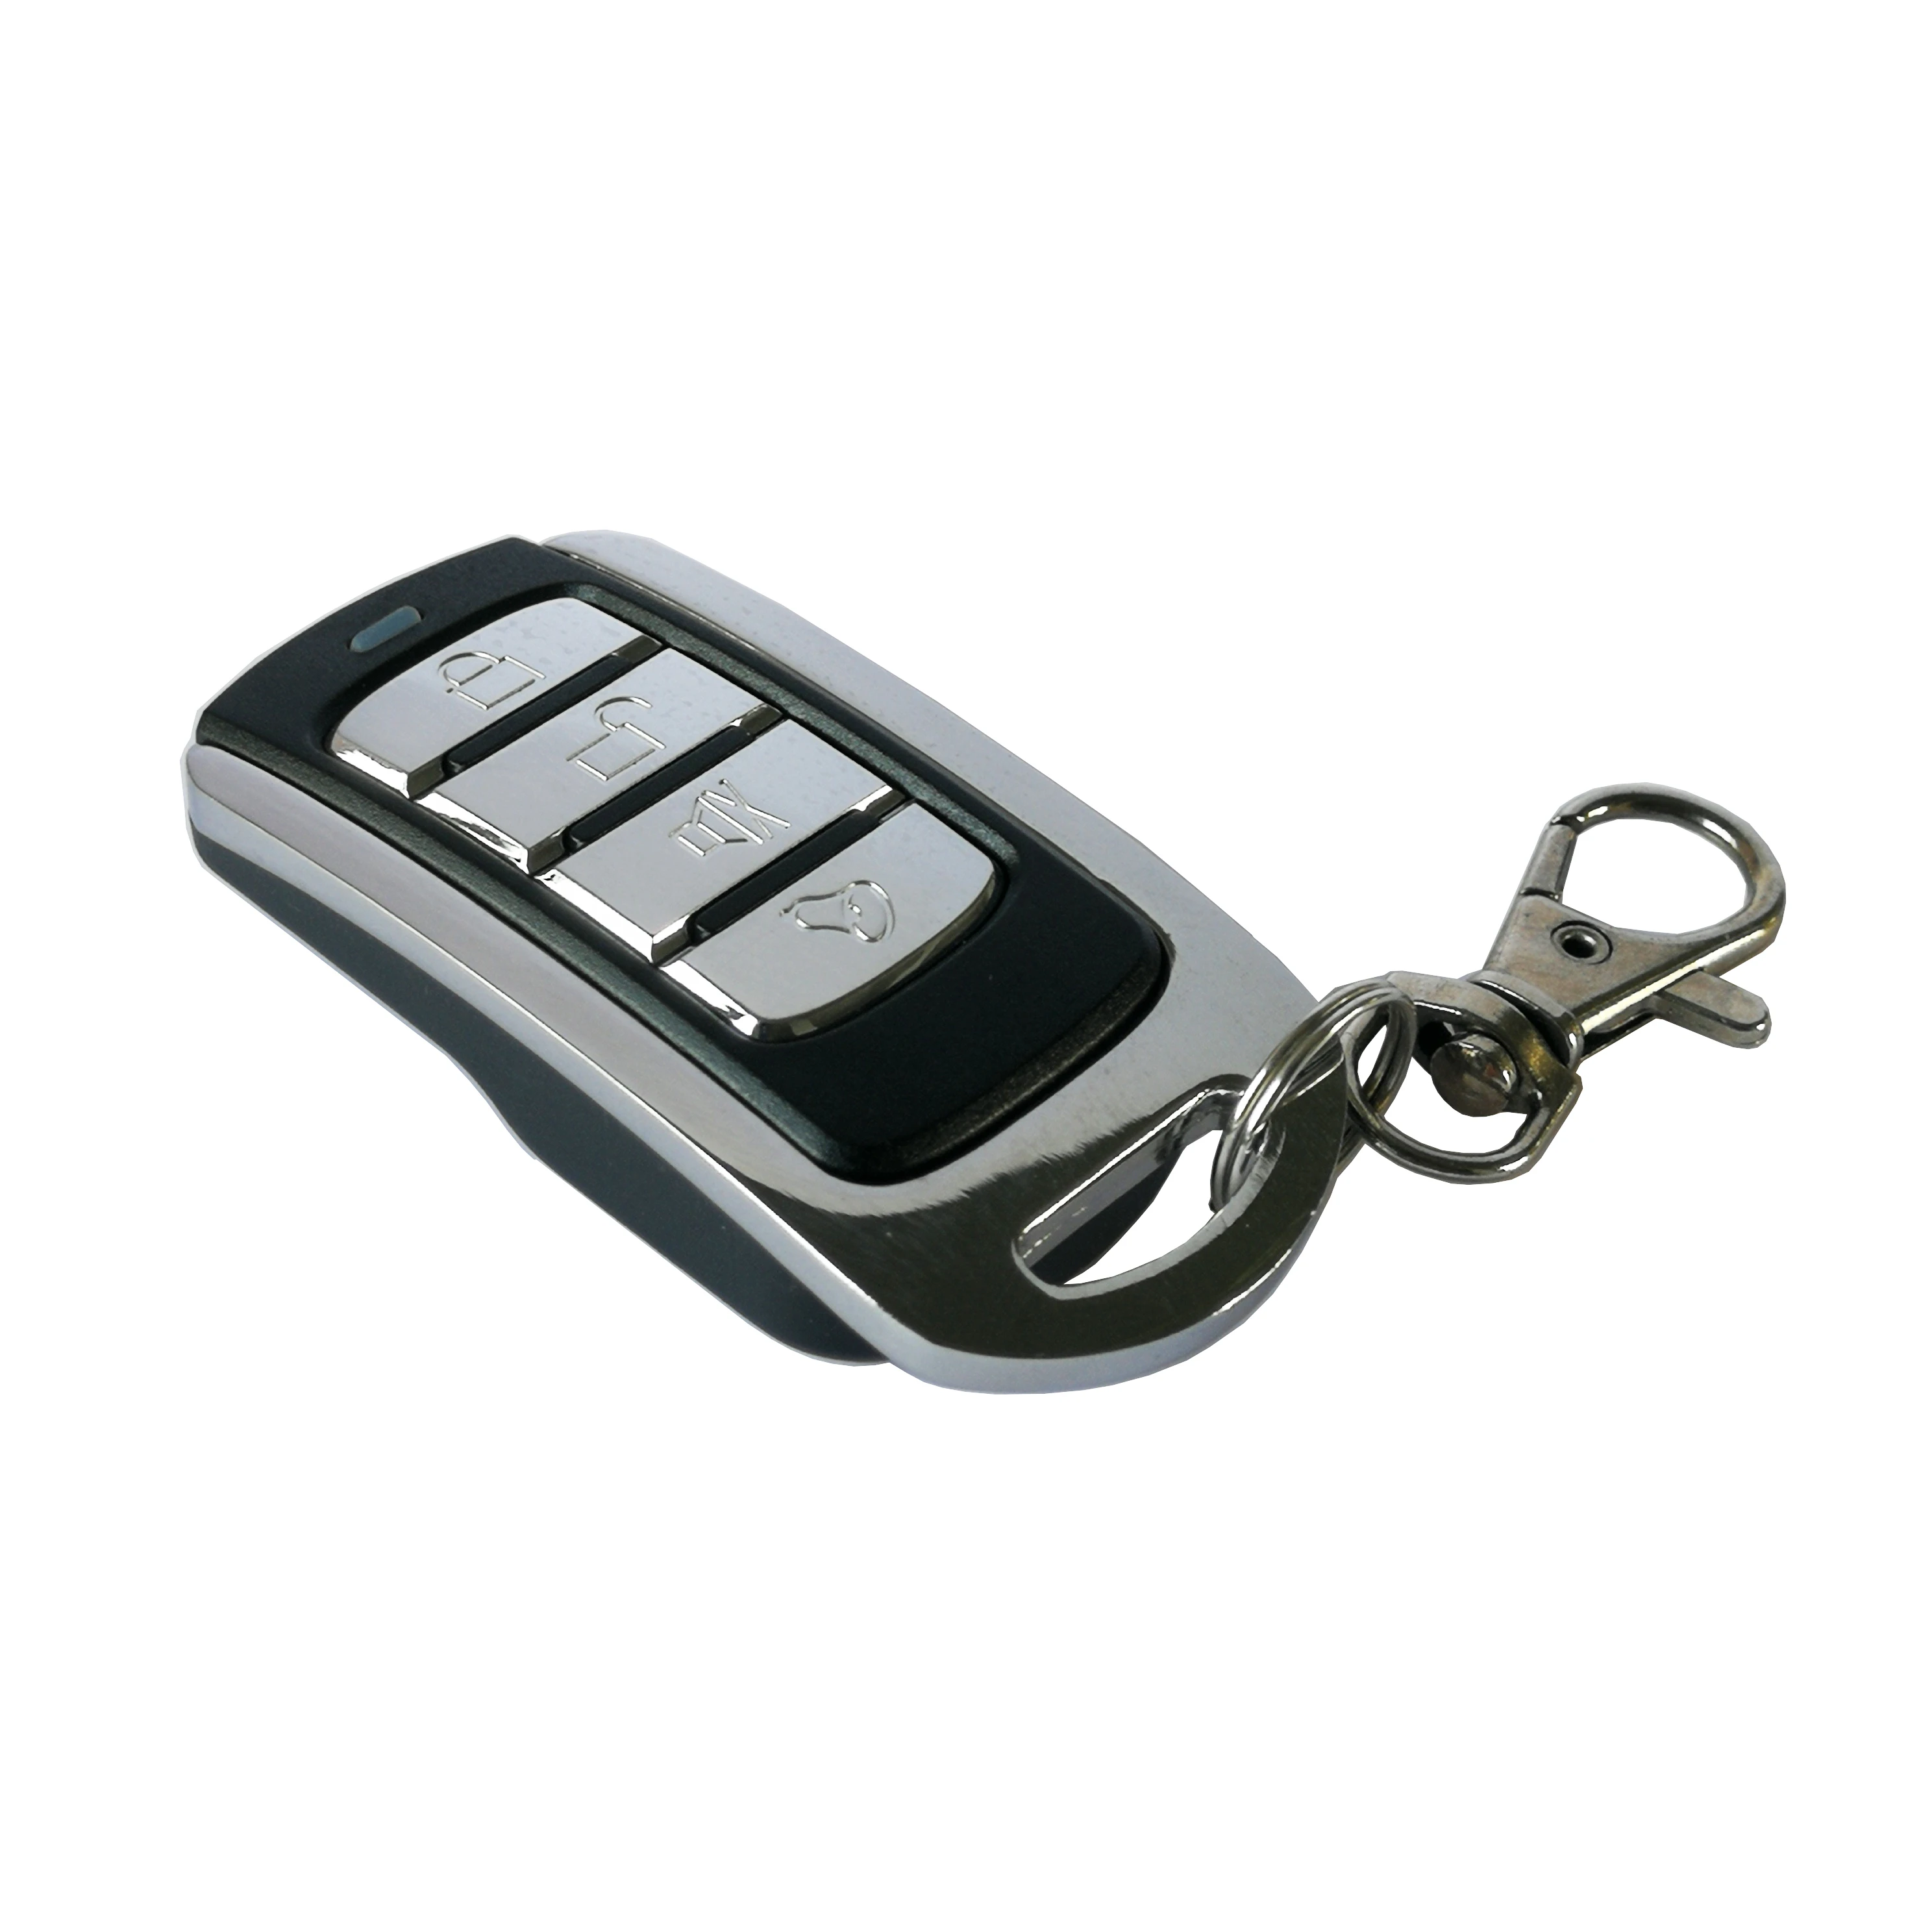 

433 universal remote control car key copy code Wireless copy code remote control Garage door remote control, Black